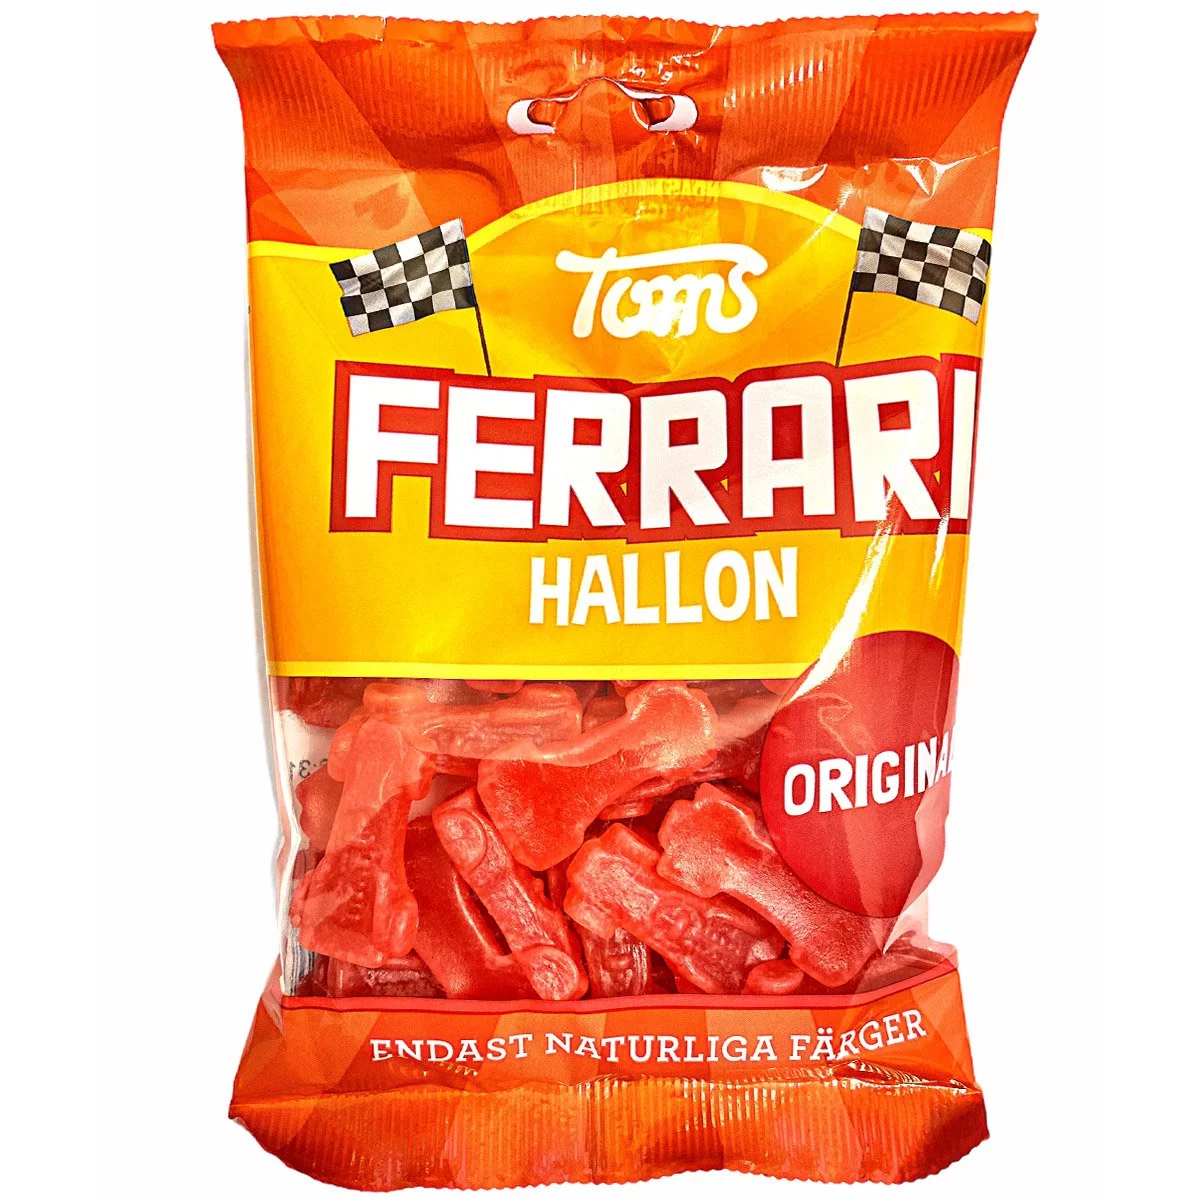 Toms Ferrari Hallon - Original (130g) 1